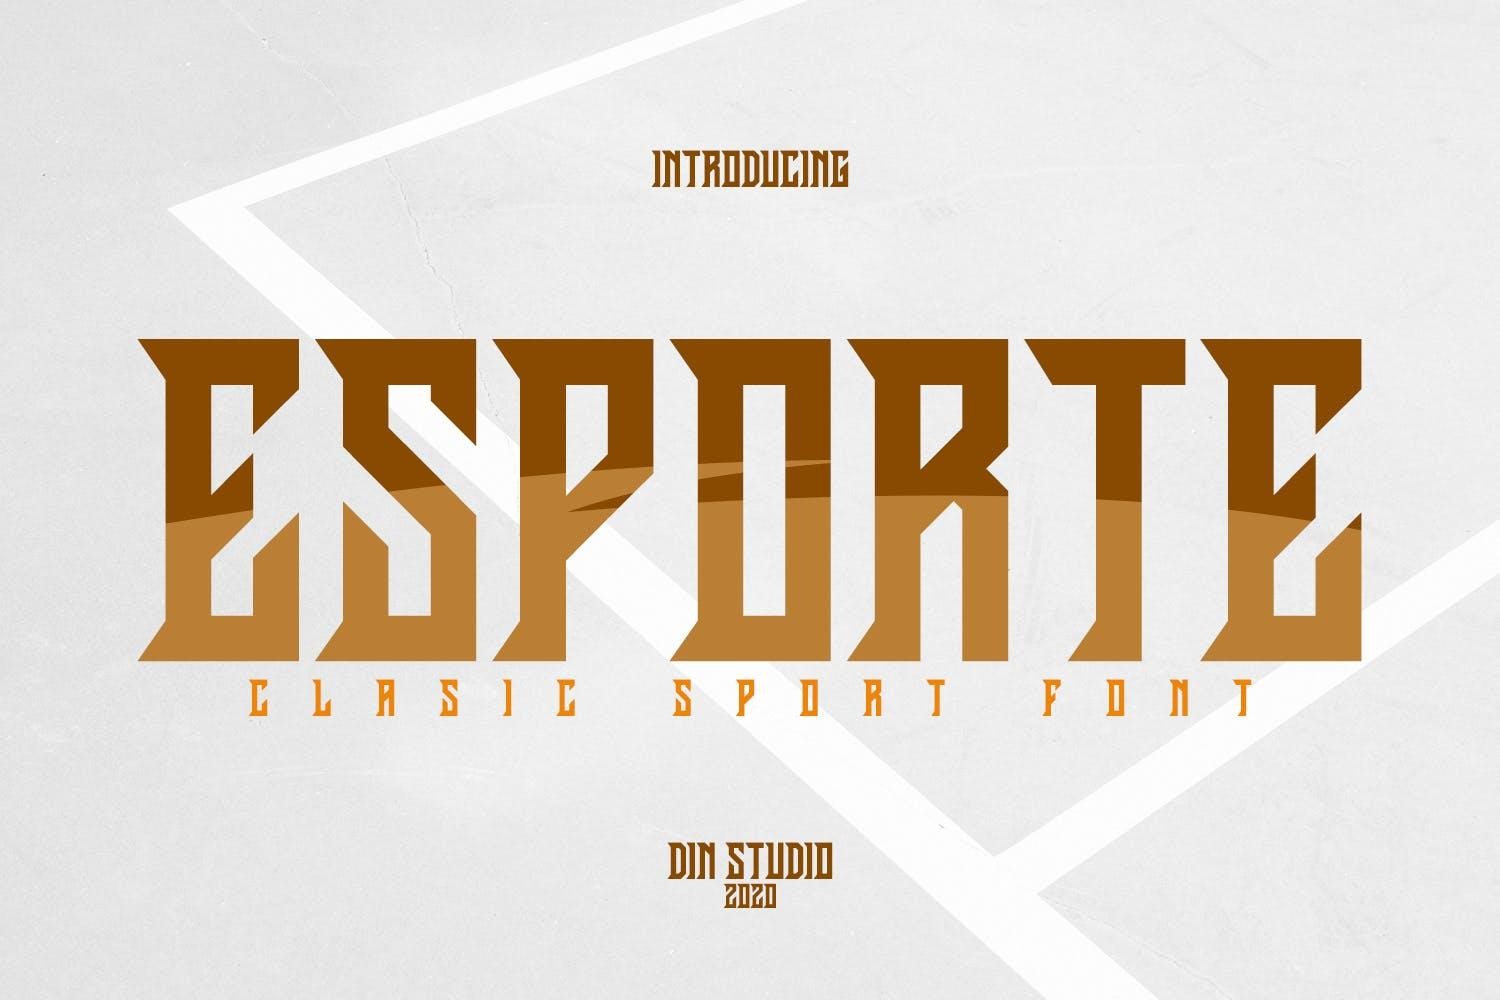 ESPORTE font by Din Studio